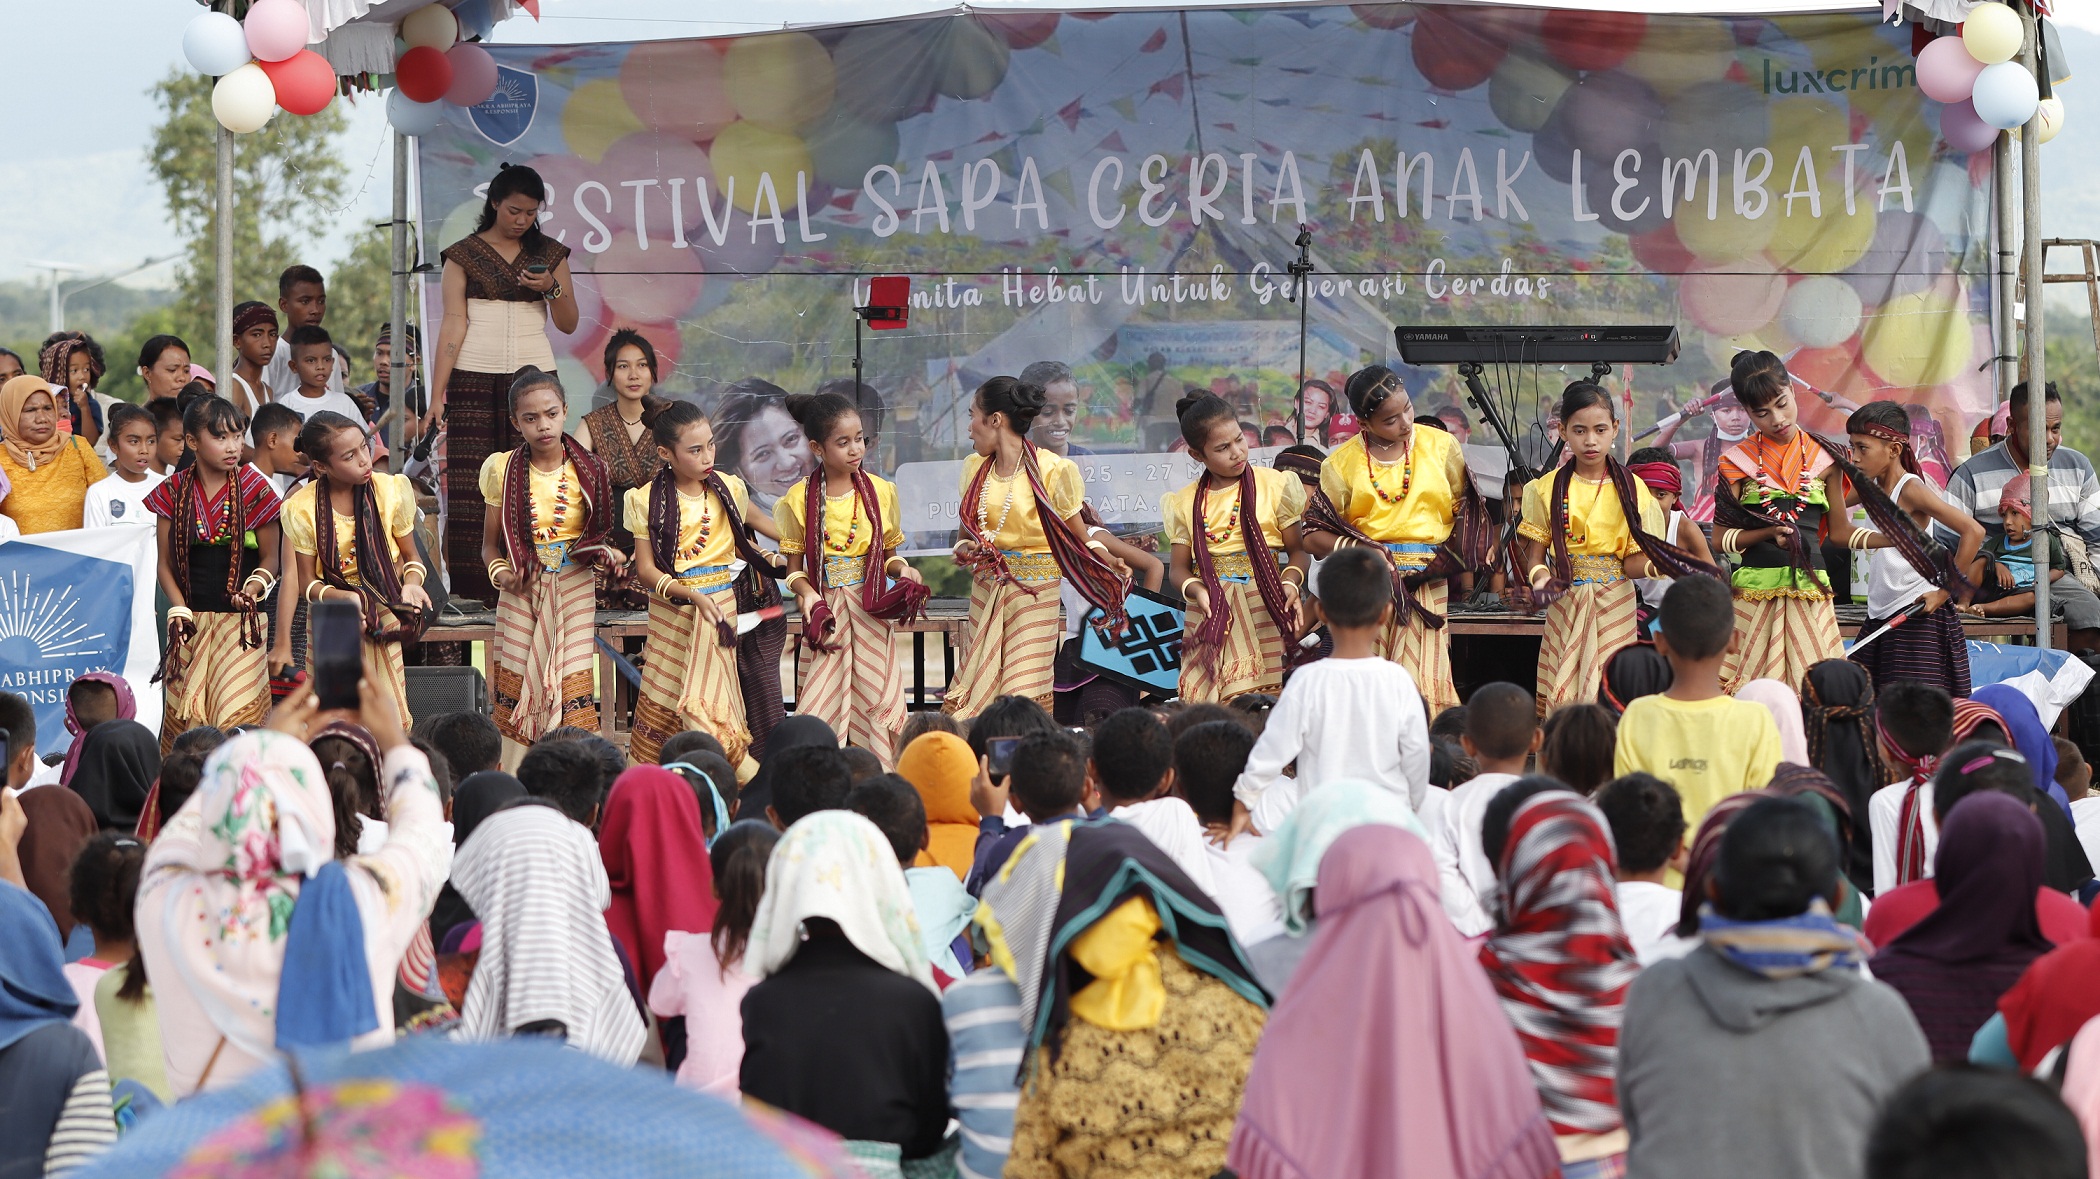 Festival Sapa Ceria Anak Lembata x Luxcrime. (Sumber gambar: Hypefast)